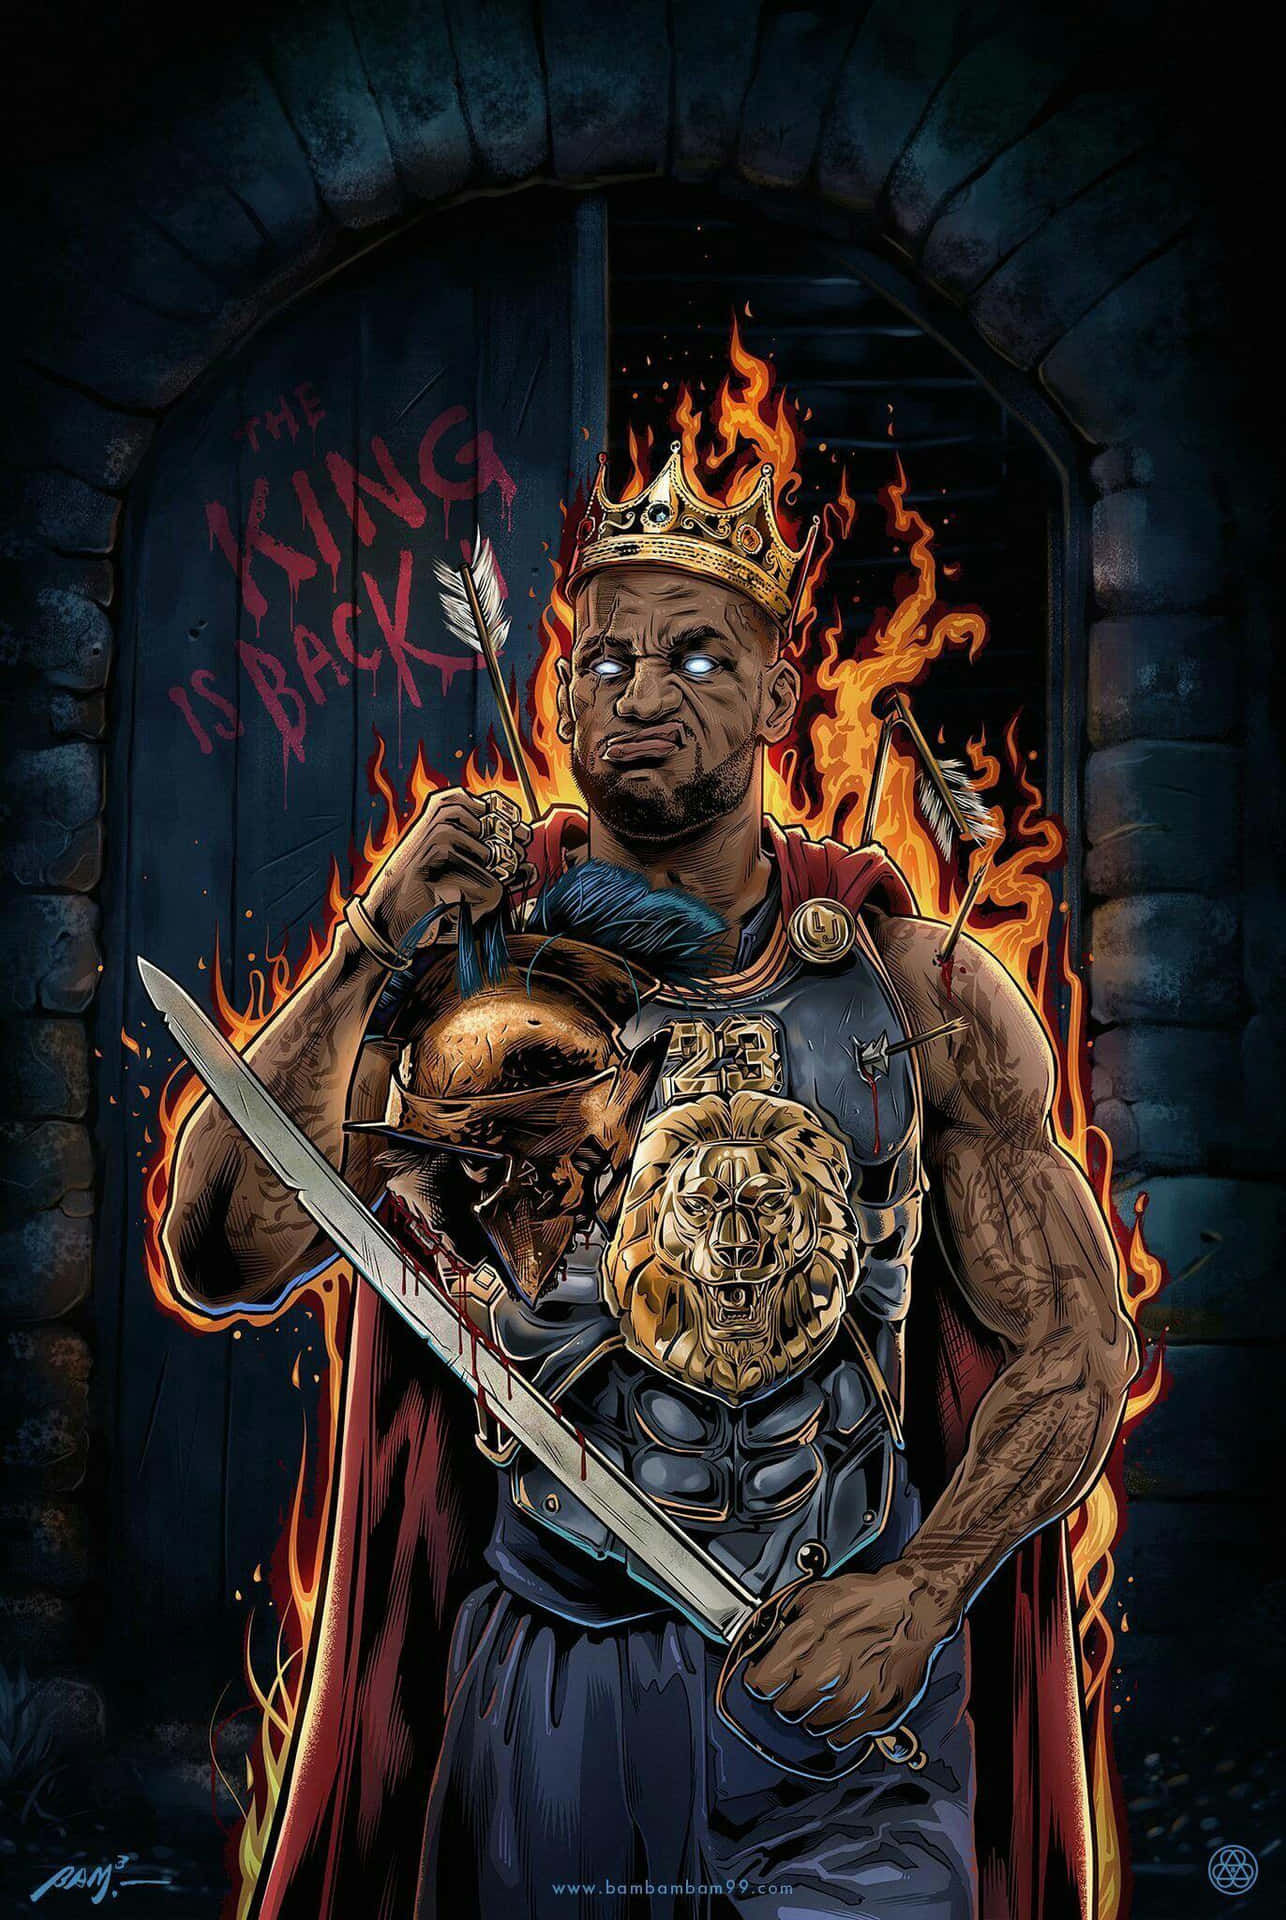 King Lebron James’ Reign Wallpaper